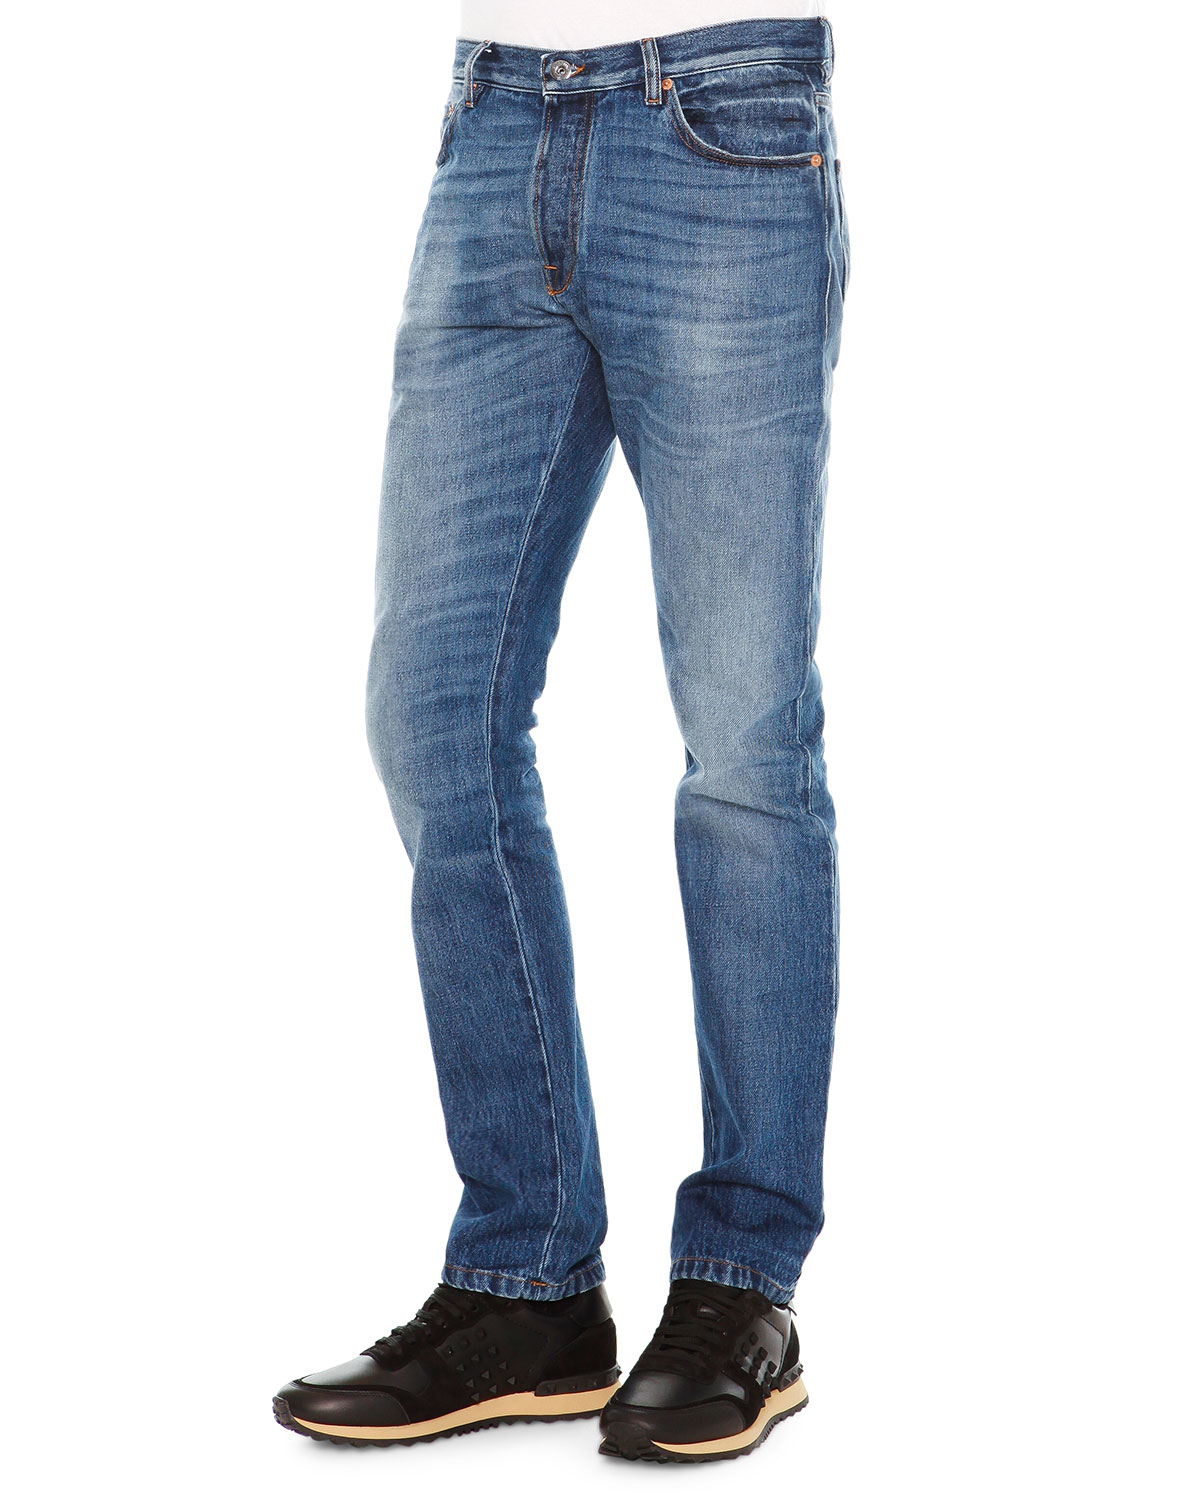 valentino jeans mens